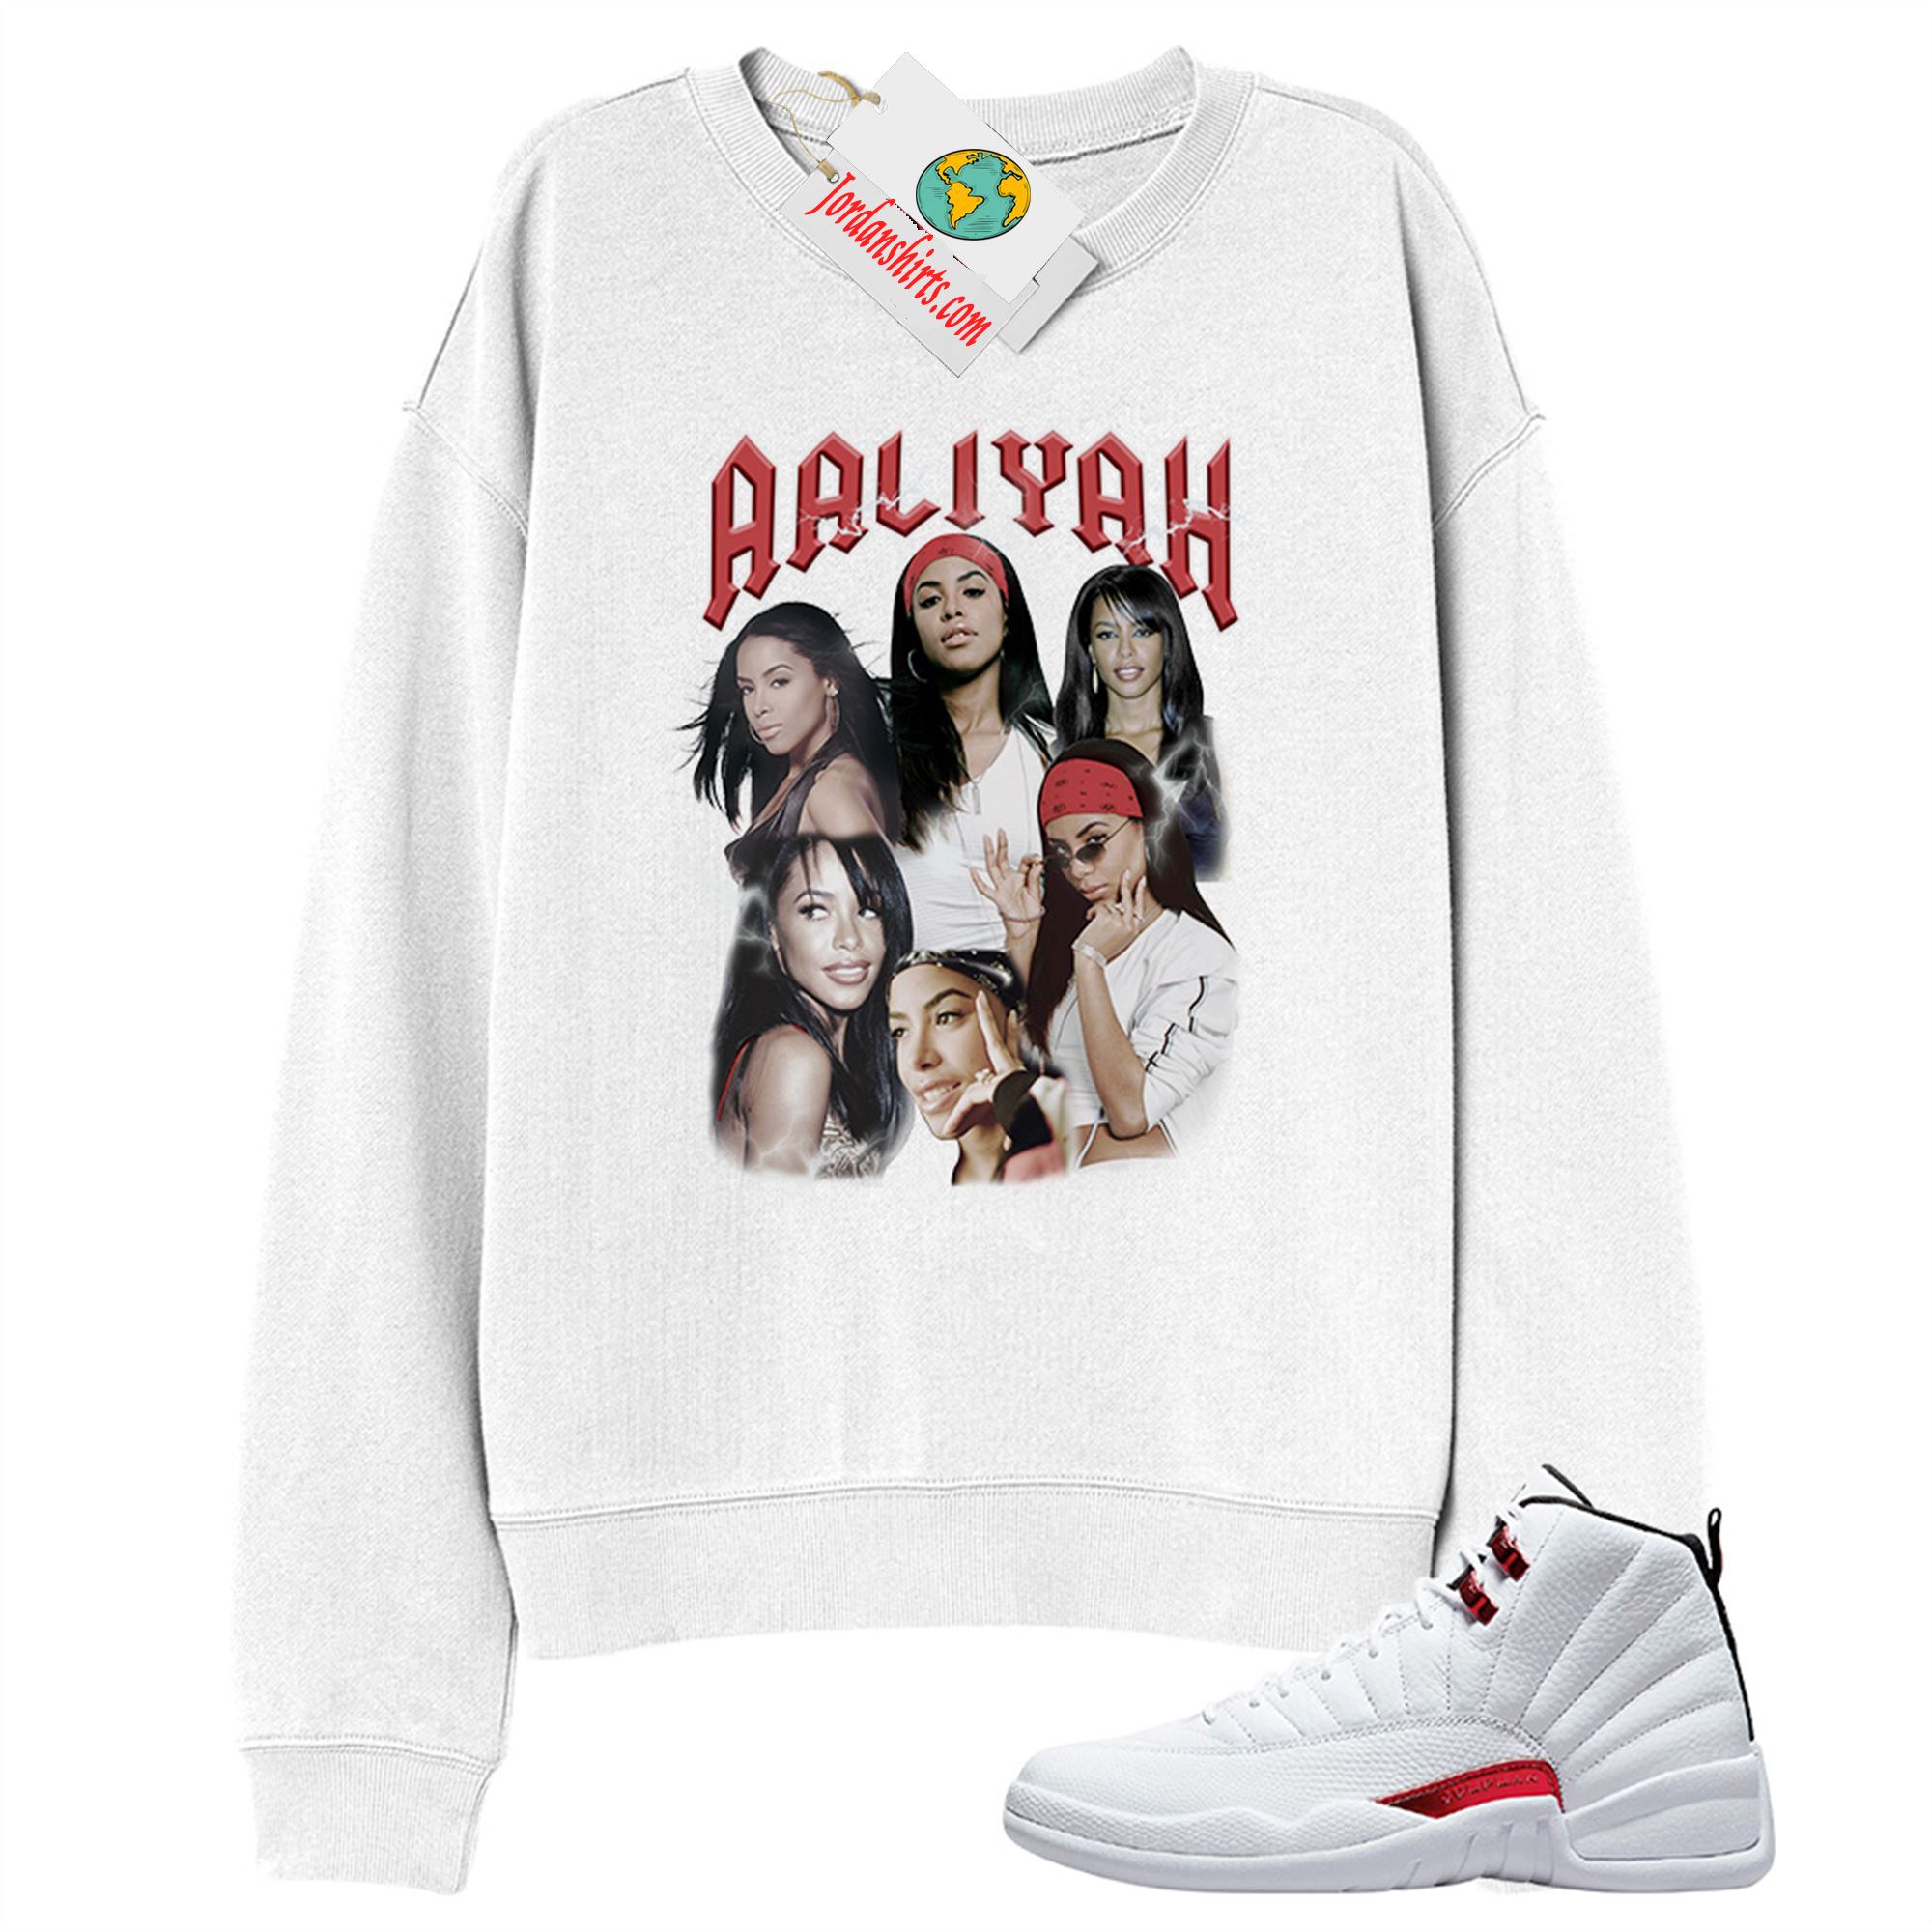 Jordan 12 Sweatshirt, Aaliyah Vintage White Sweatshirt Air Jordan 12 Twist 12s Full Size Up To 5xl